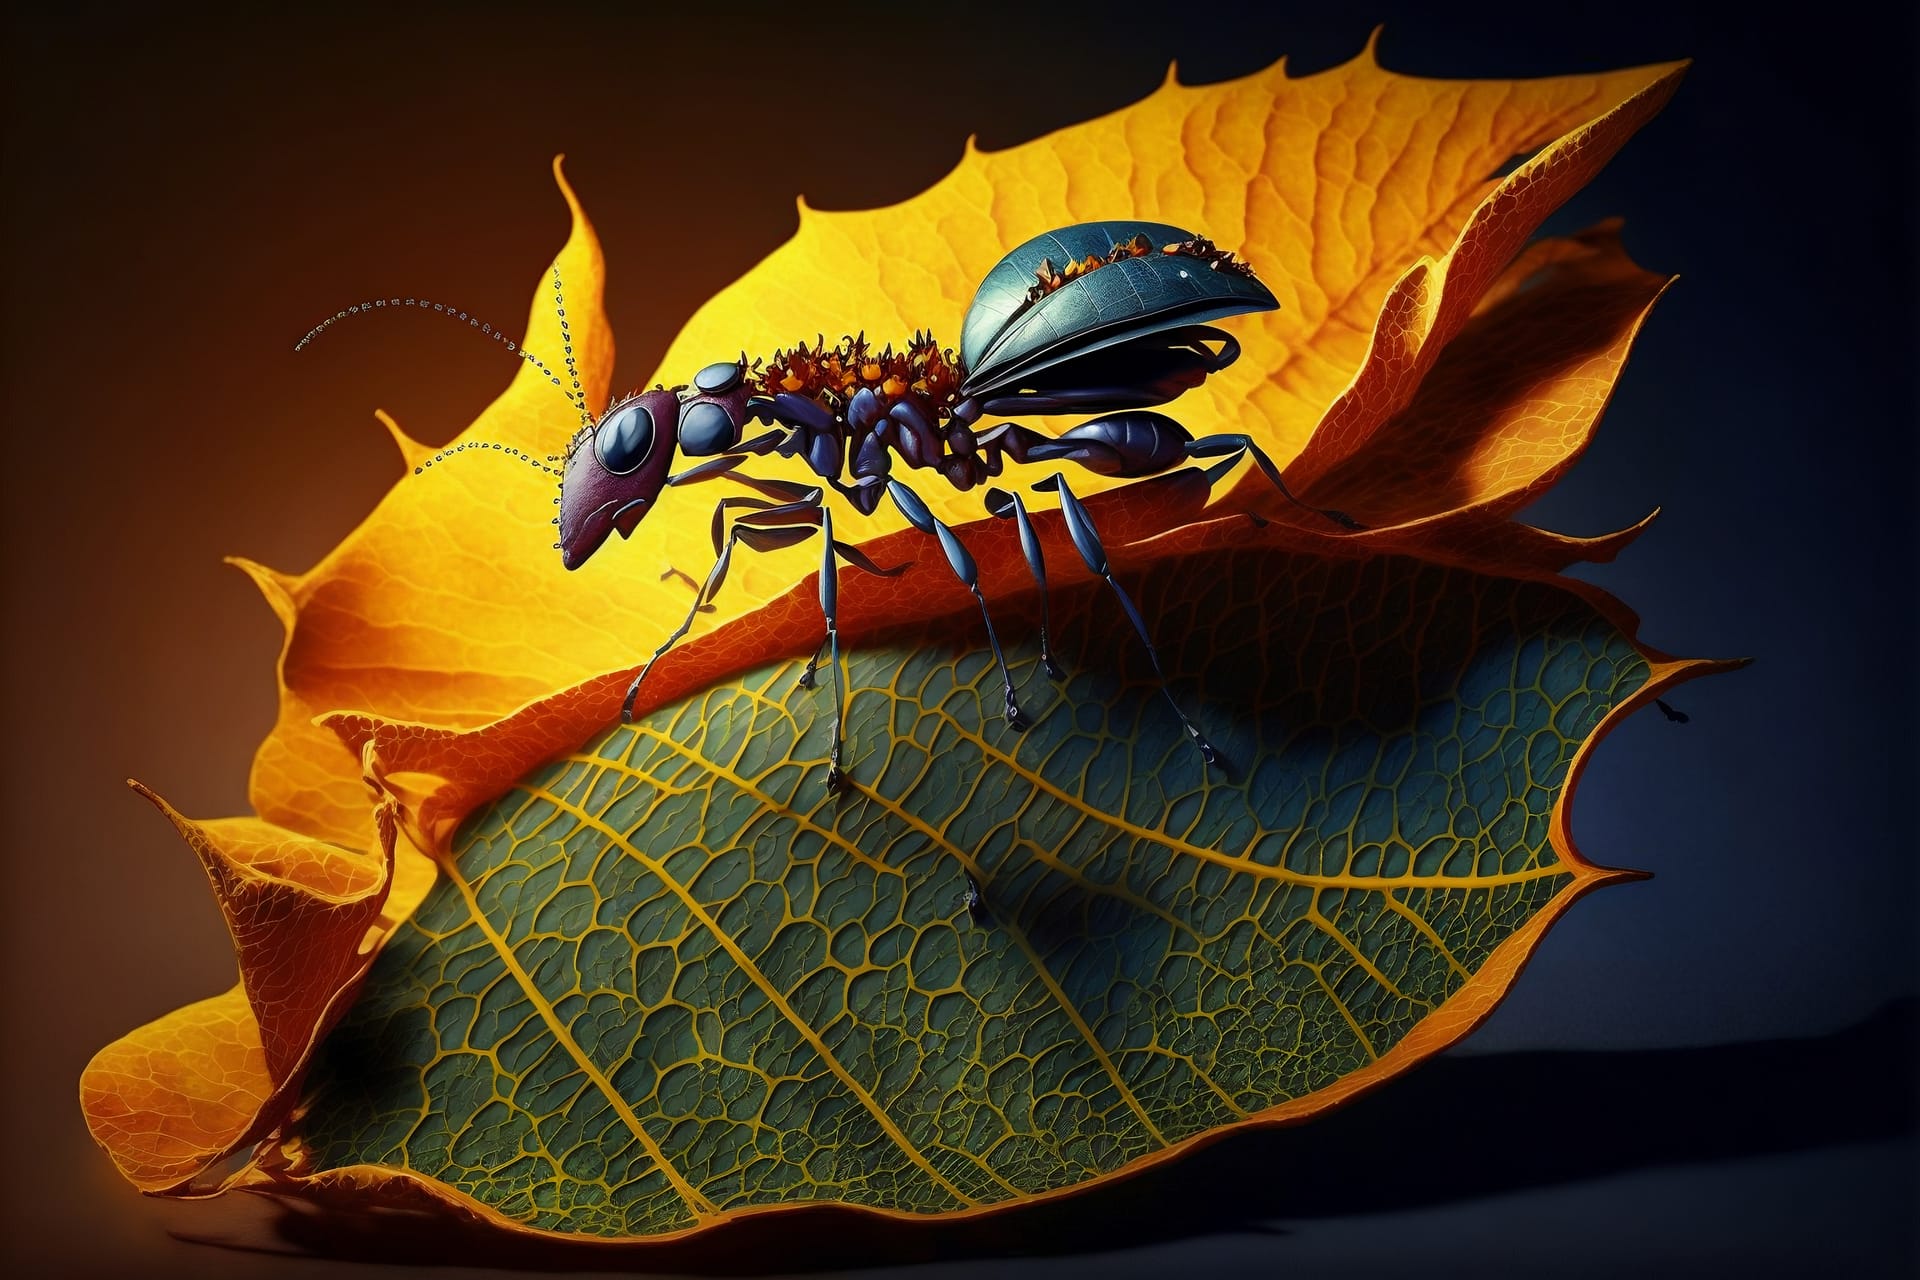 Ant sitting sunflower leaf creative digital painting 3d illustration image